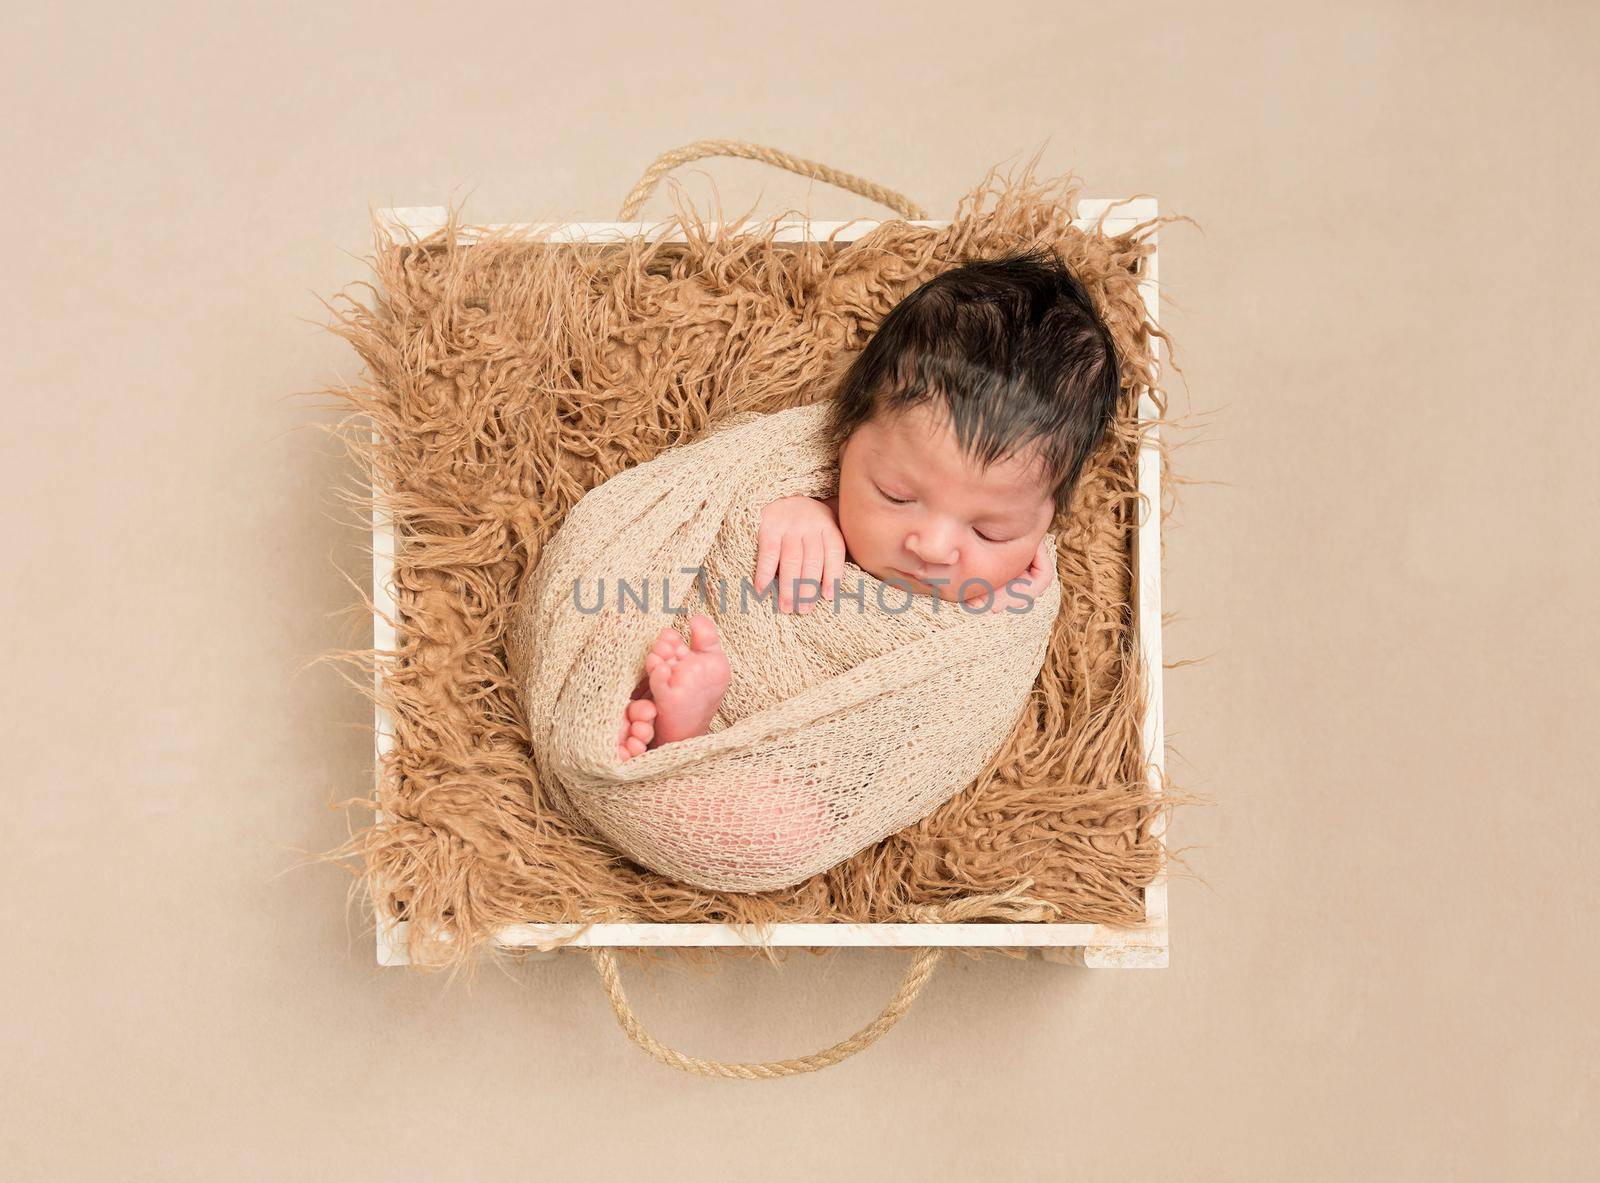 Lovely hairy baby resting in a basket by tan4ikk1